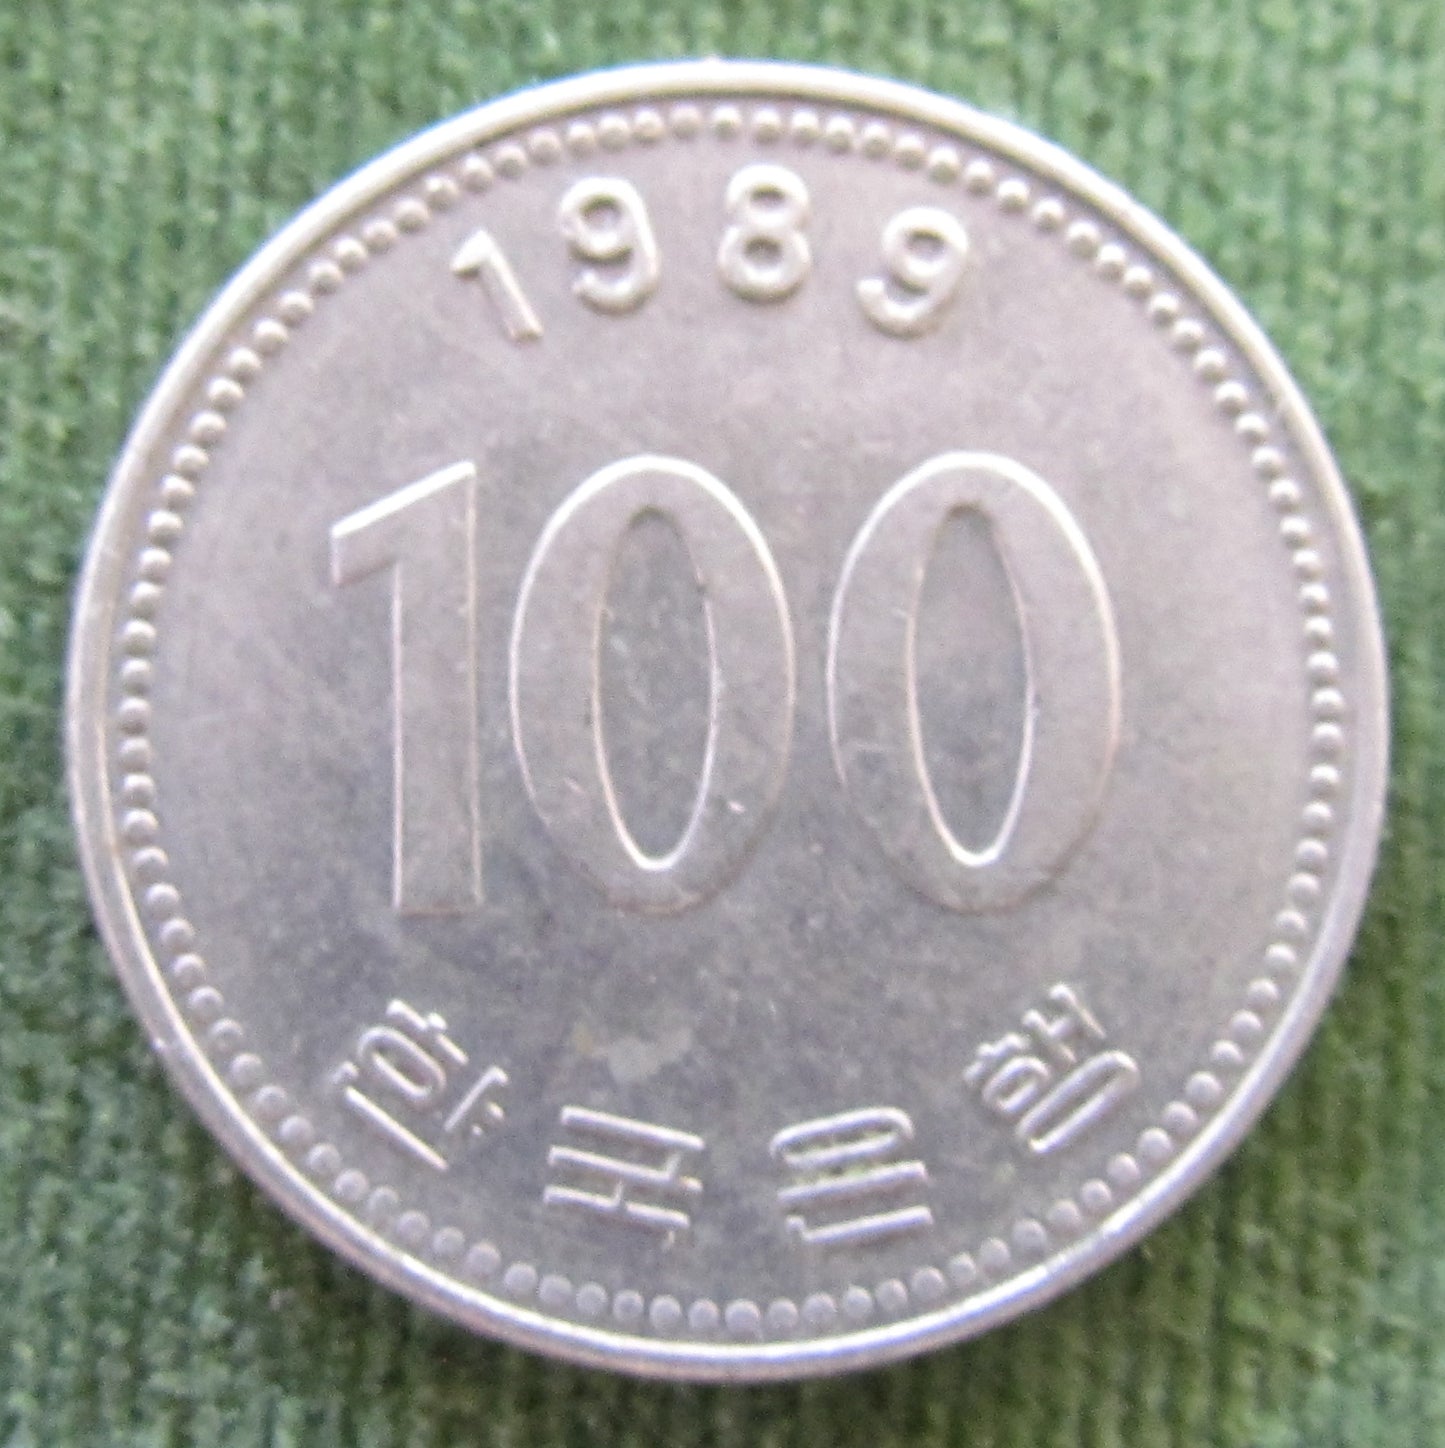 Japanese 1989 100 Yen Coin - Circulated